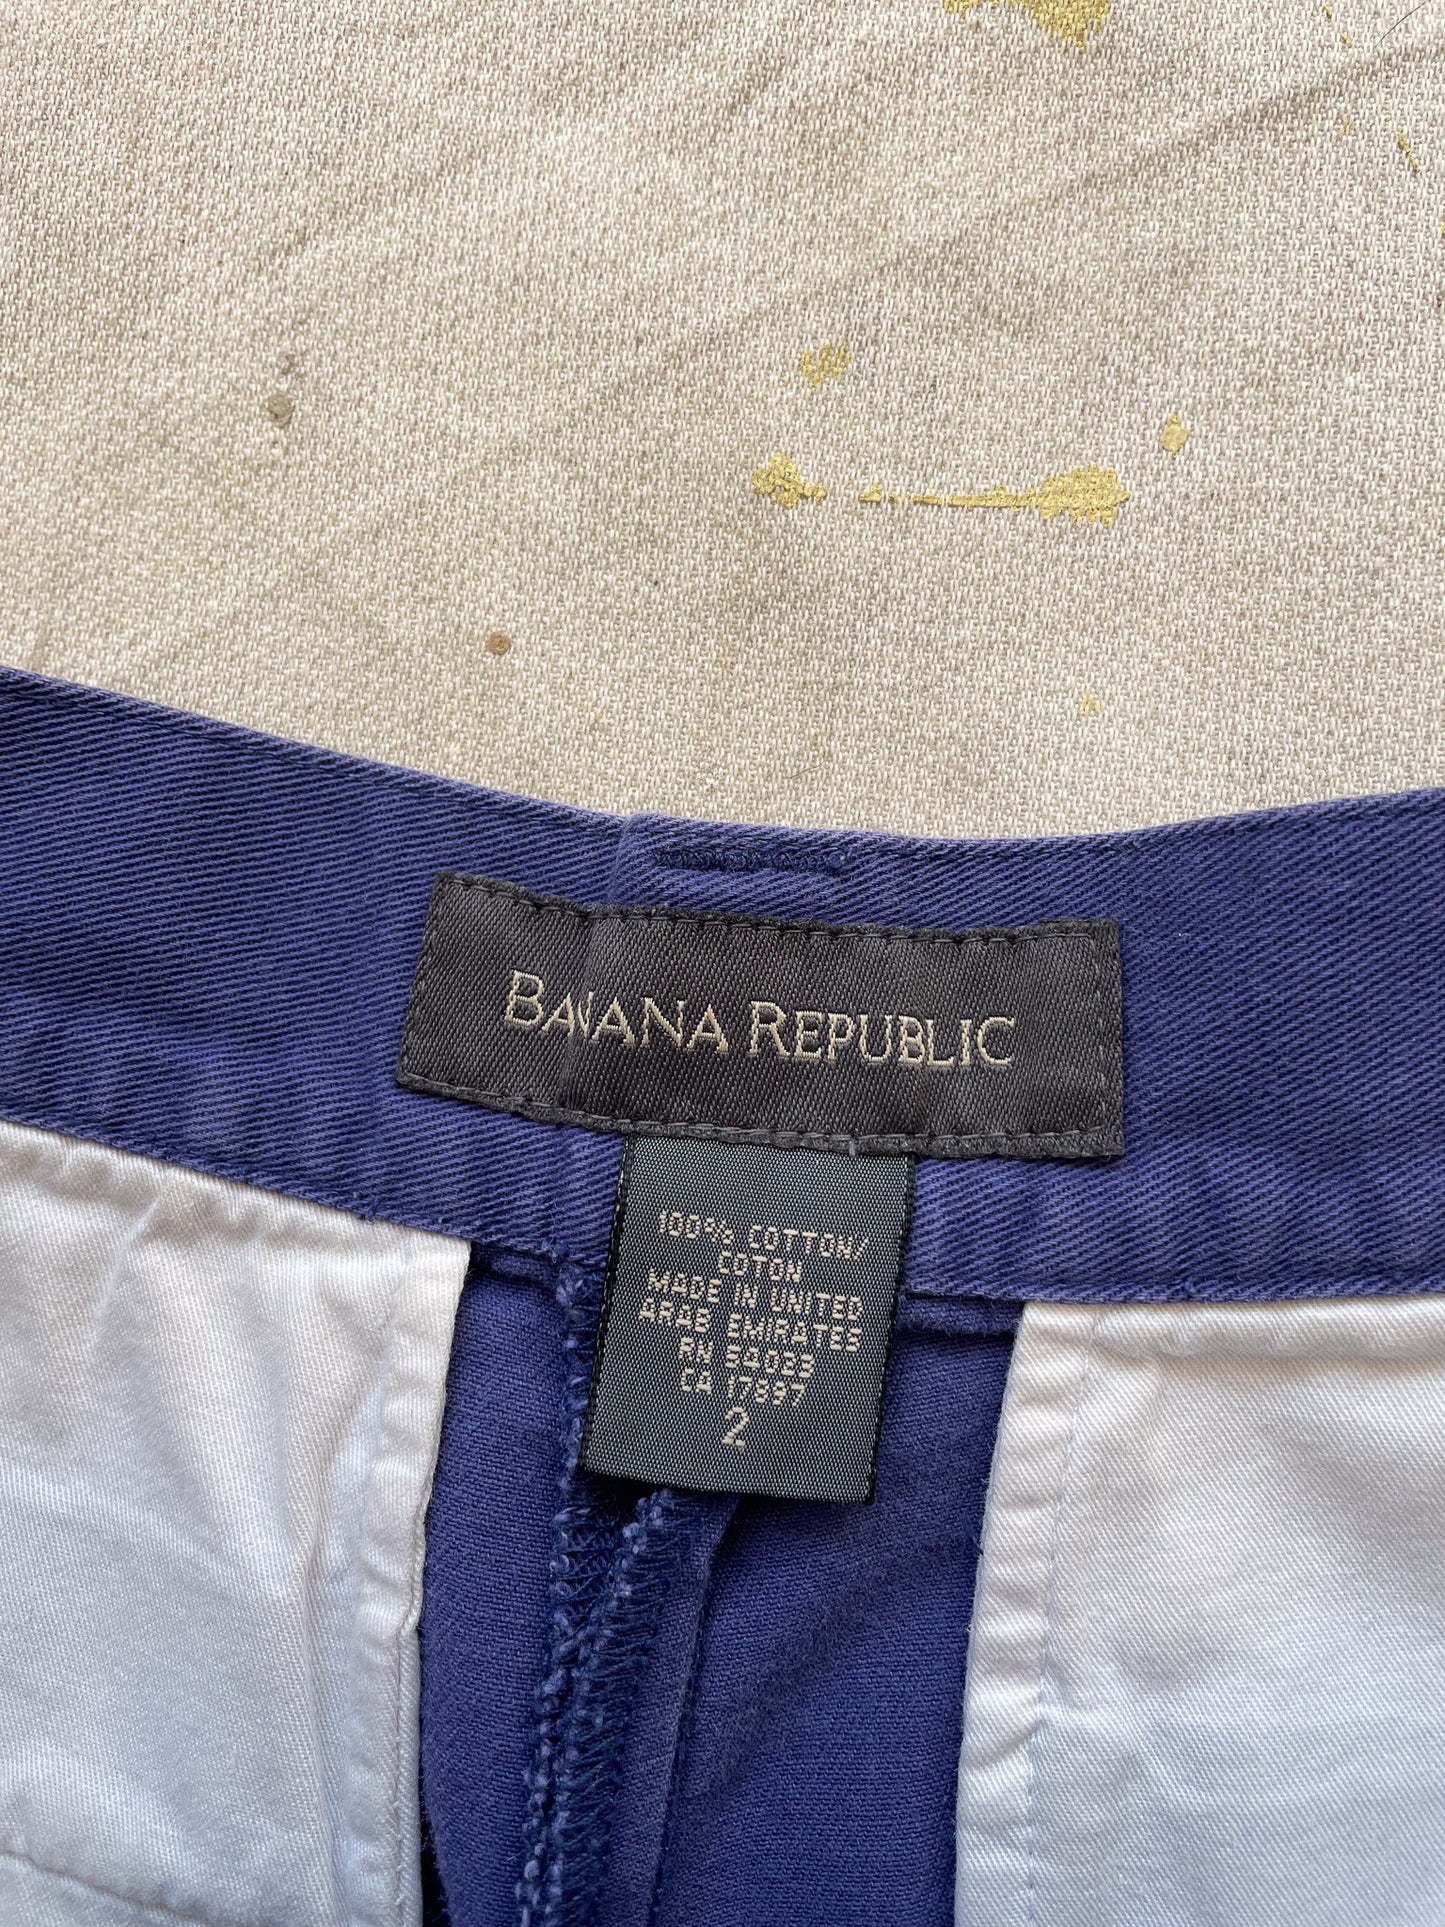 Banana Republic Cotton Shorts—[24]